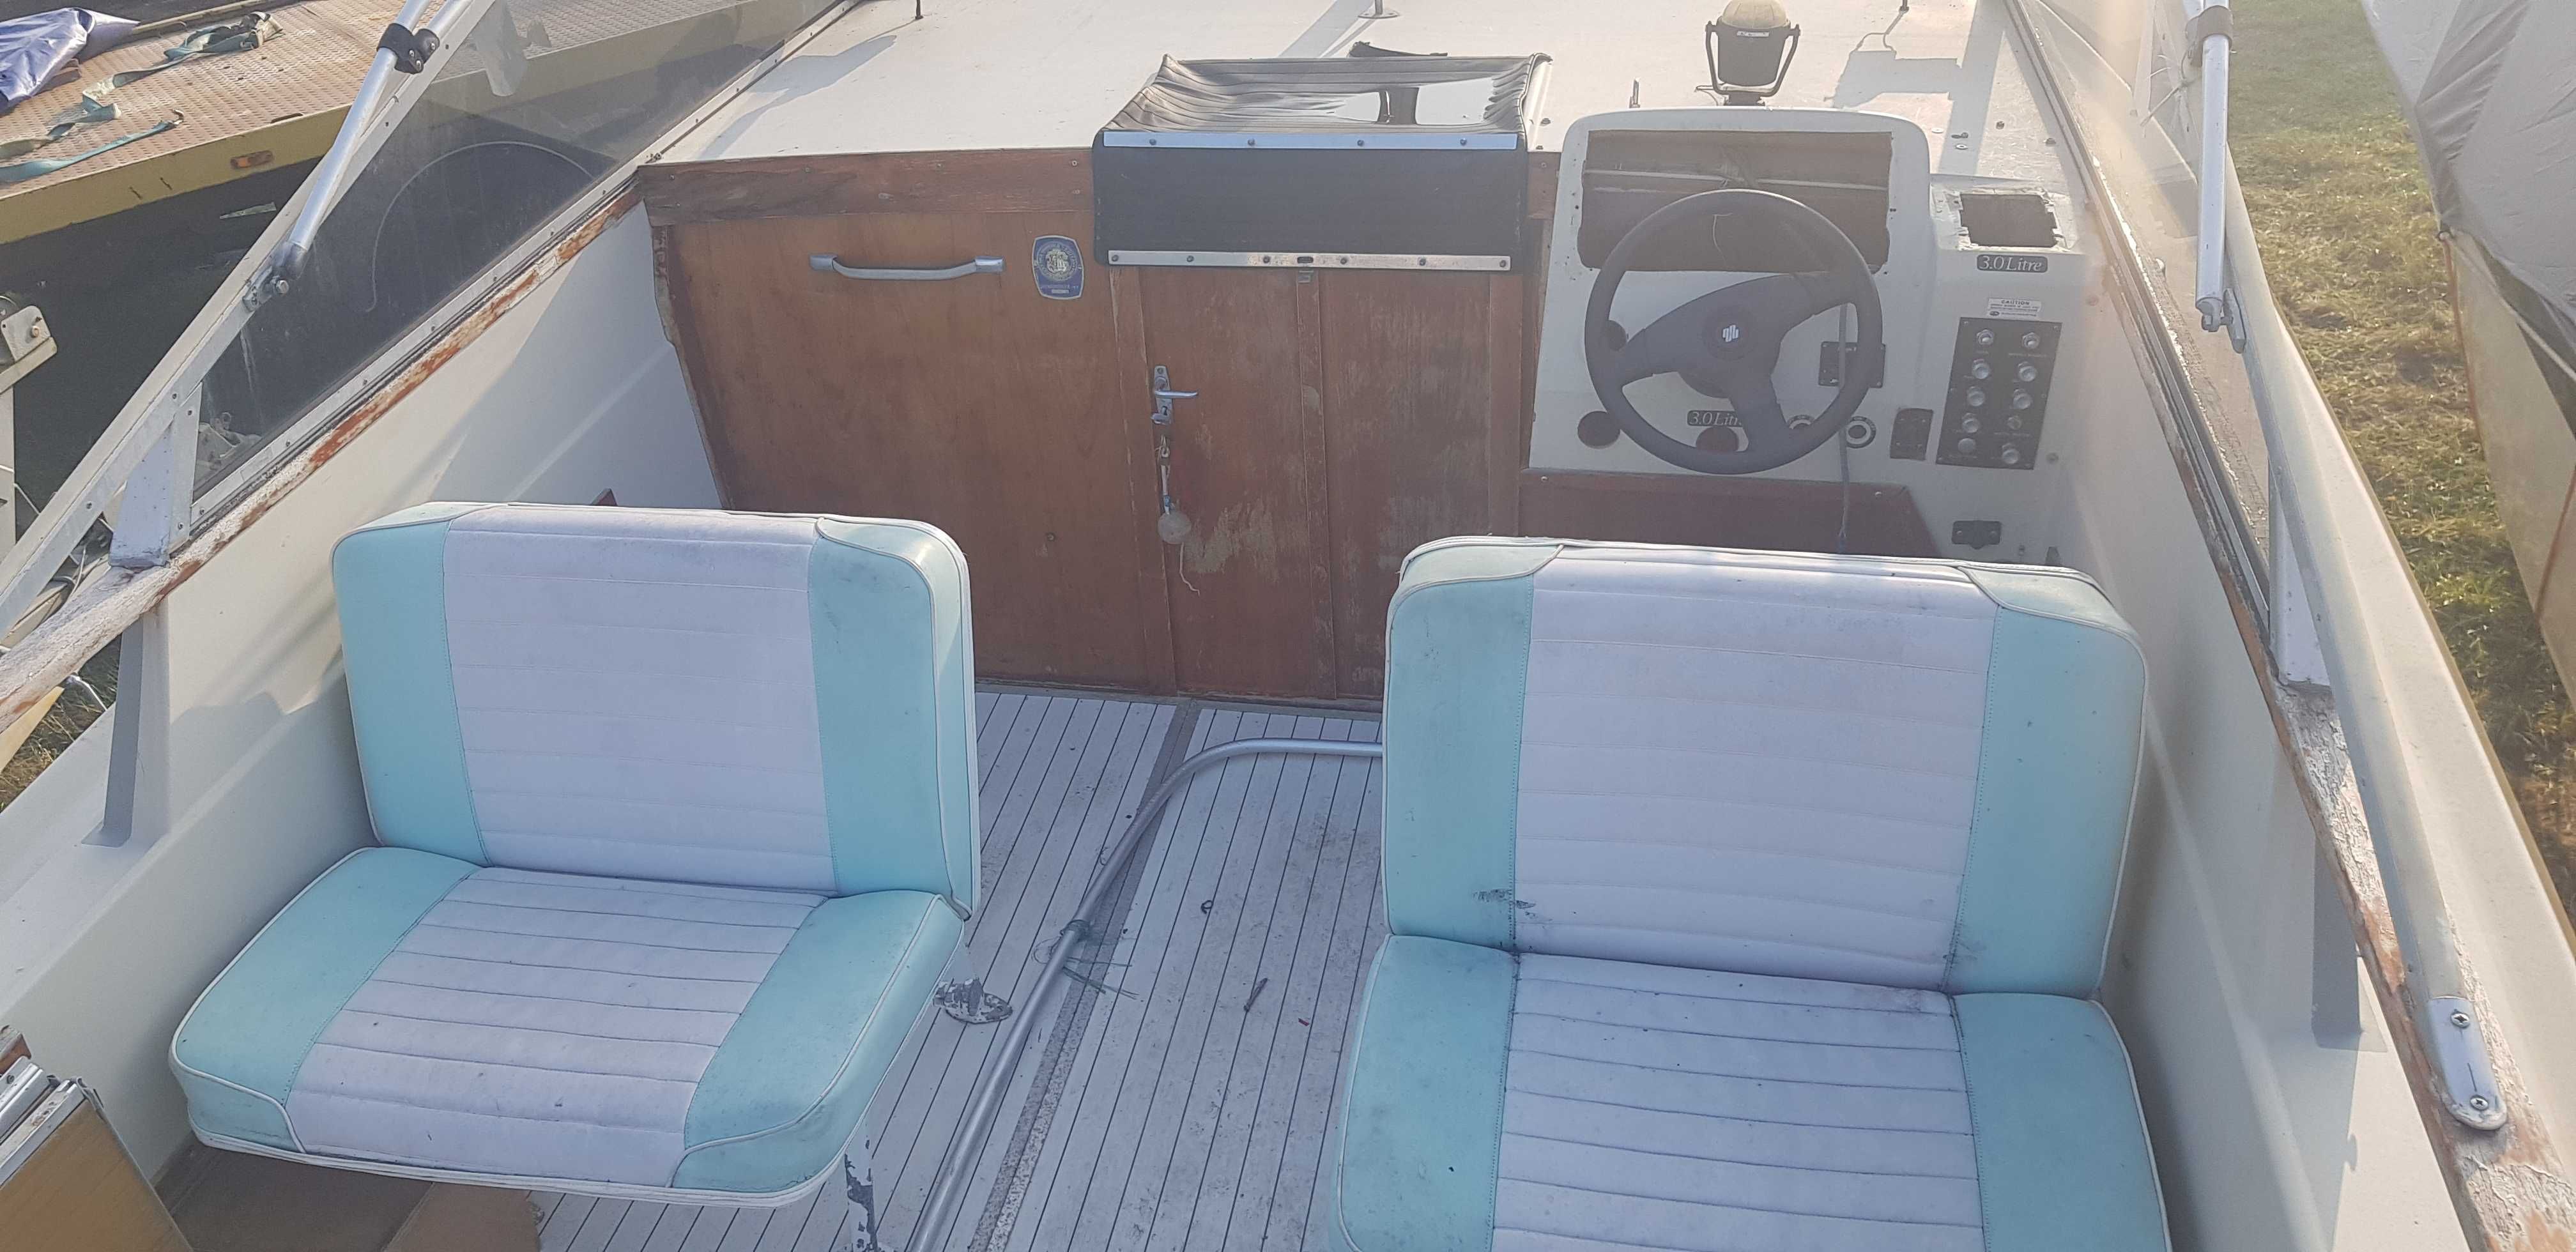 jacht motorowy WINDY 7,3m kabina wc bayliner